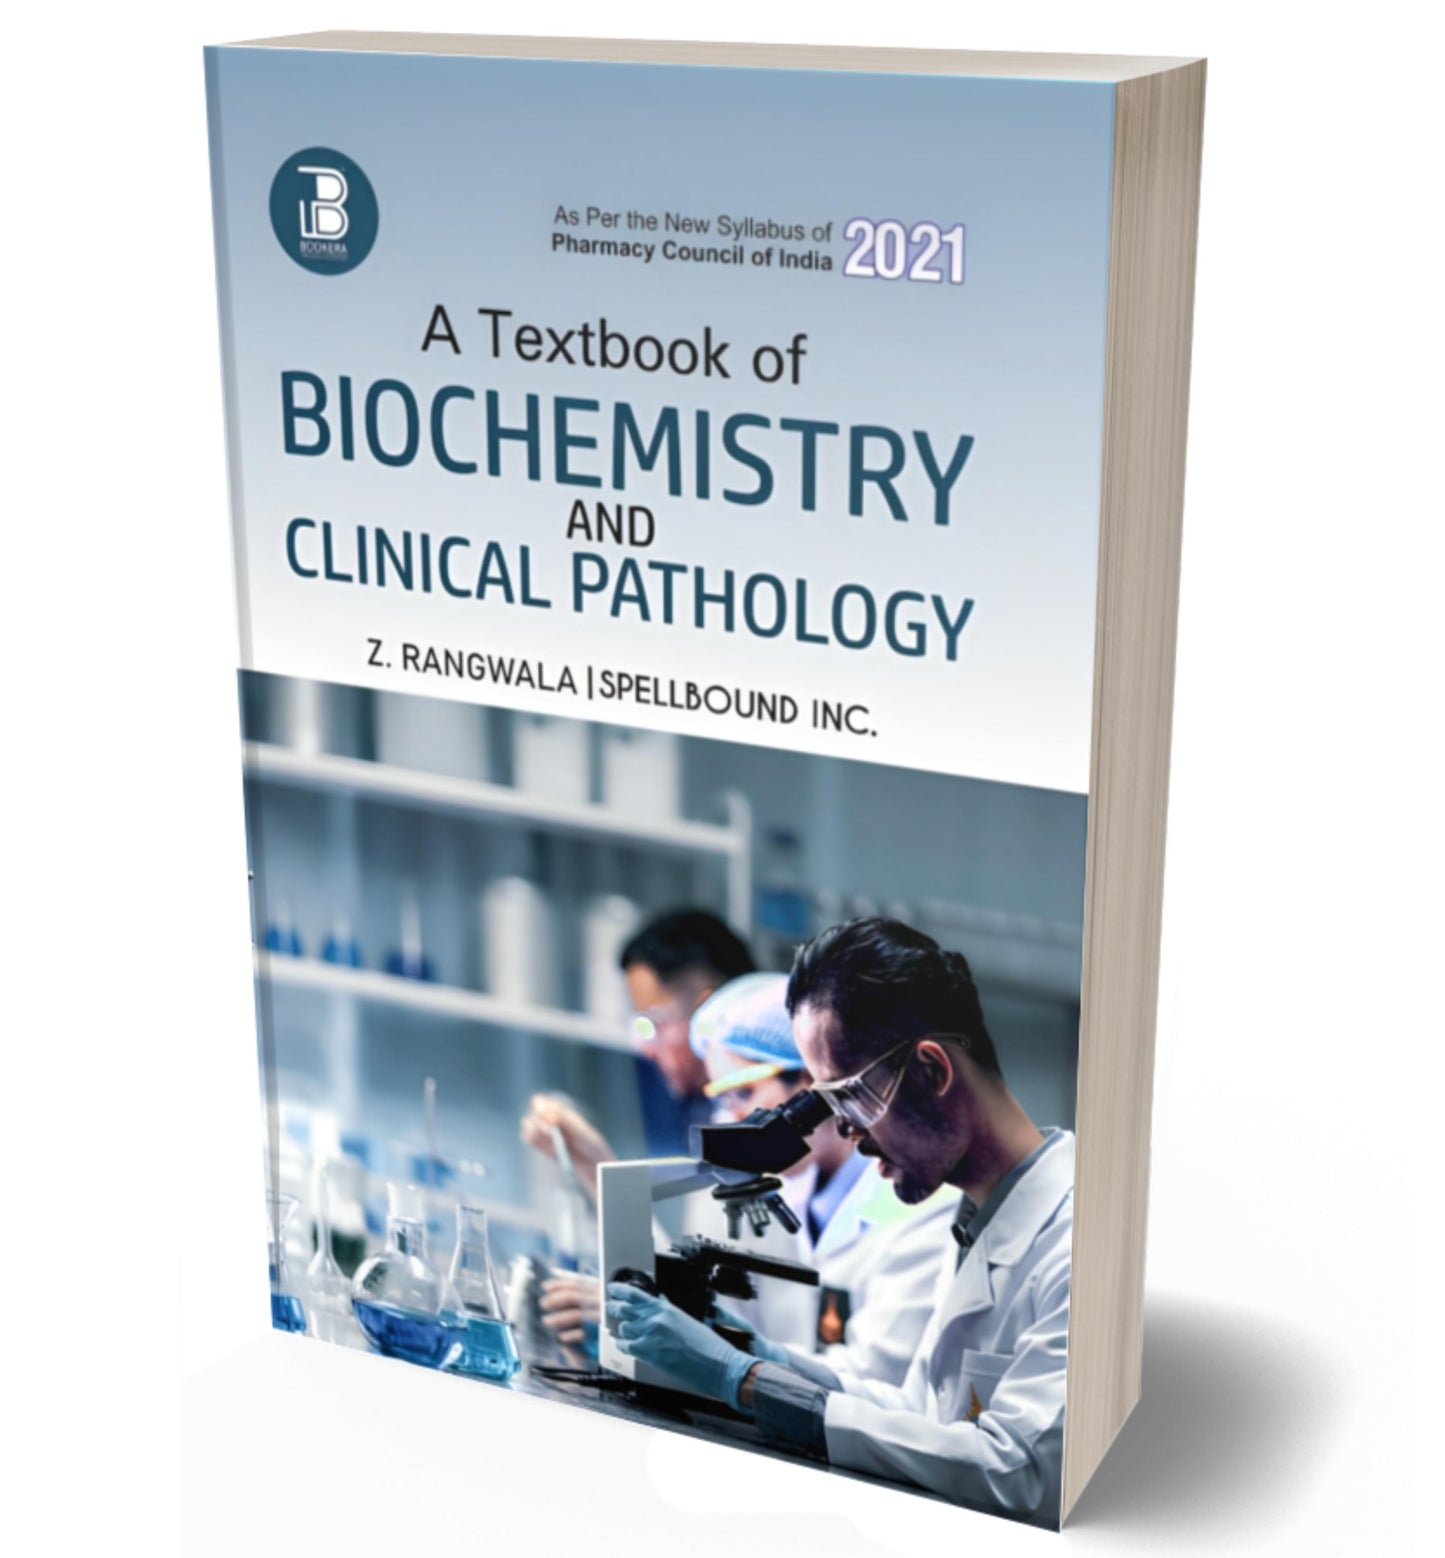 A Textbook of Biochemistry & Clinical Pathology